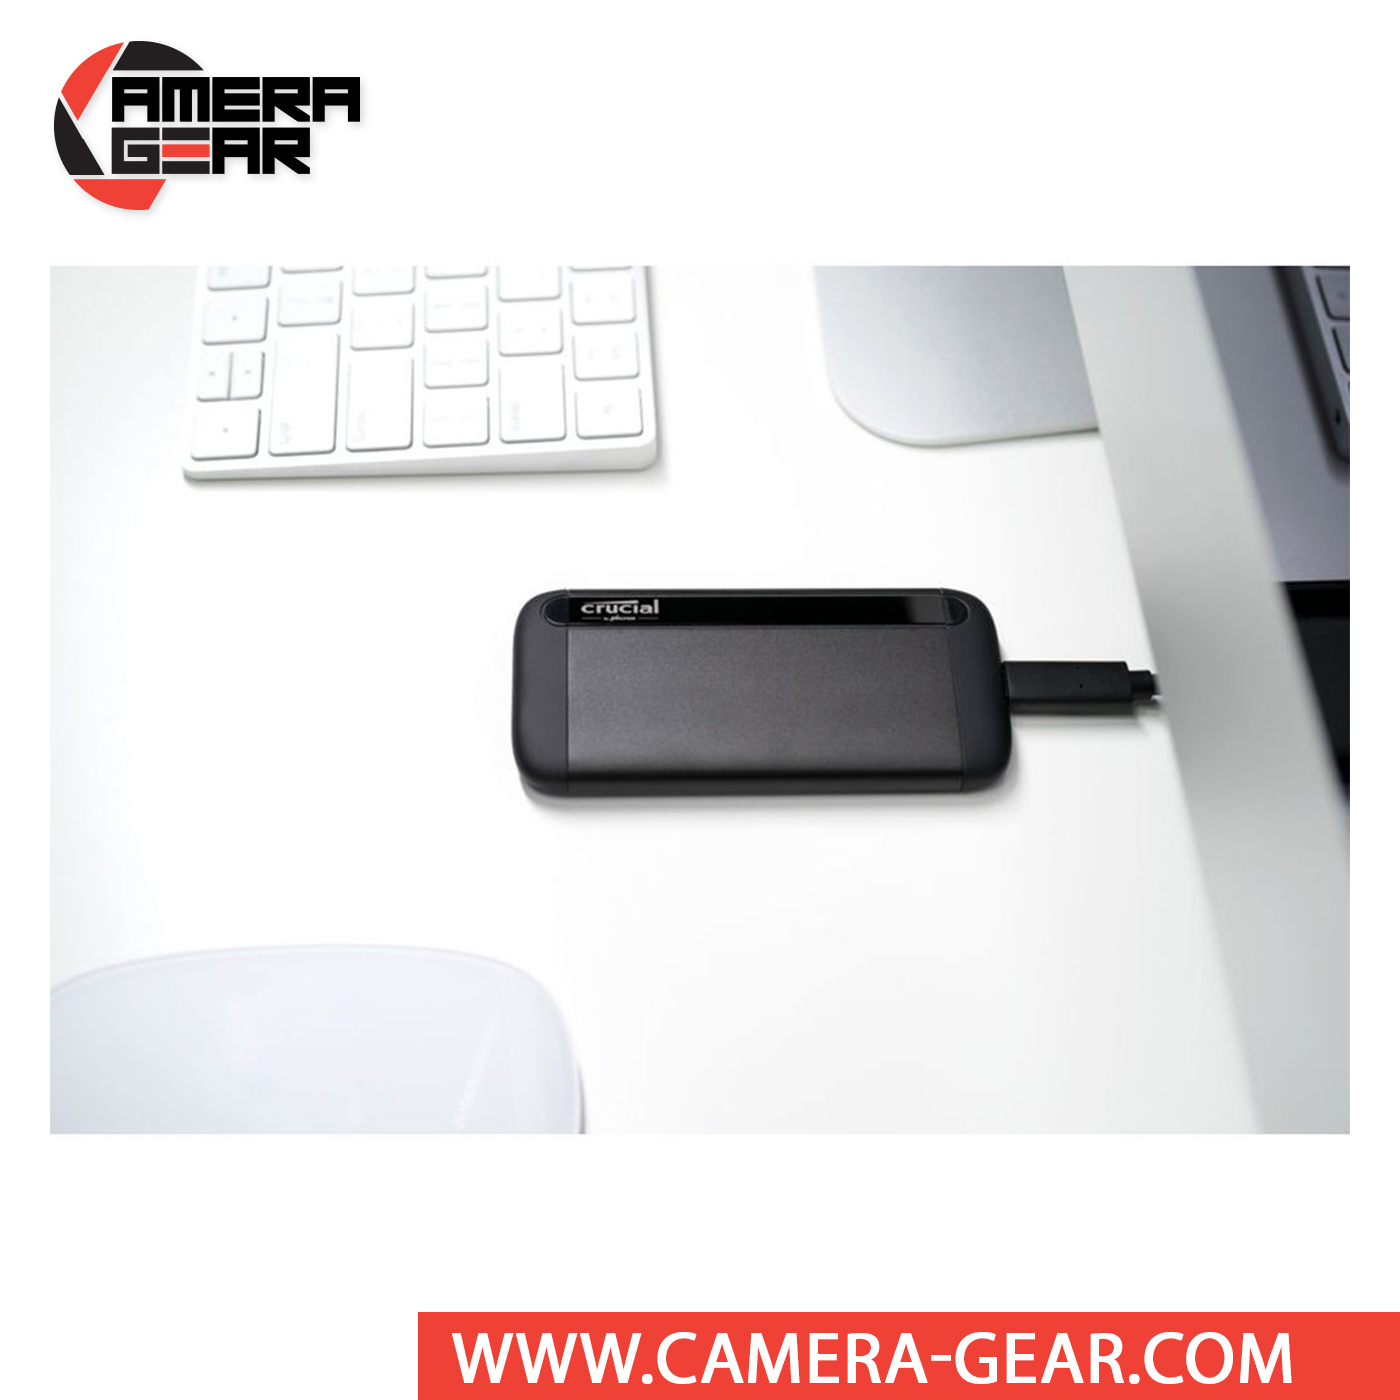 Crucial 1TB X8 Portable SSD – Up to 1050MB/s – USB 3.2 – USB-C USB